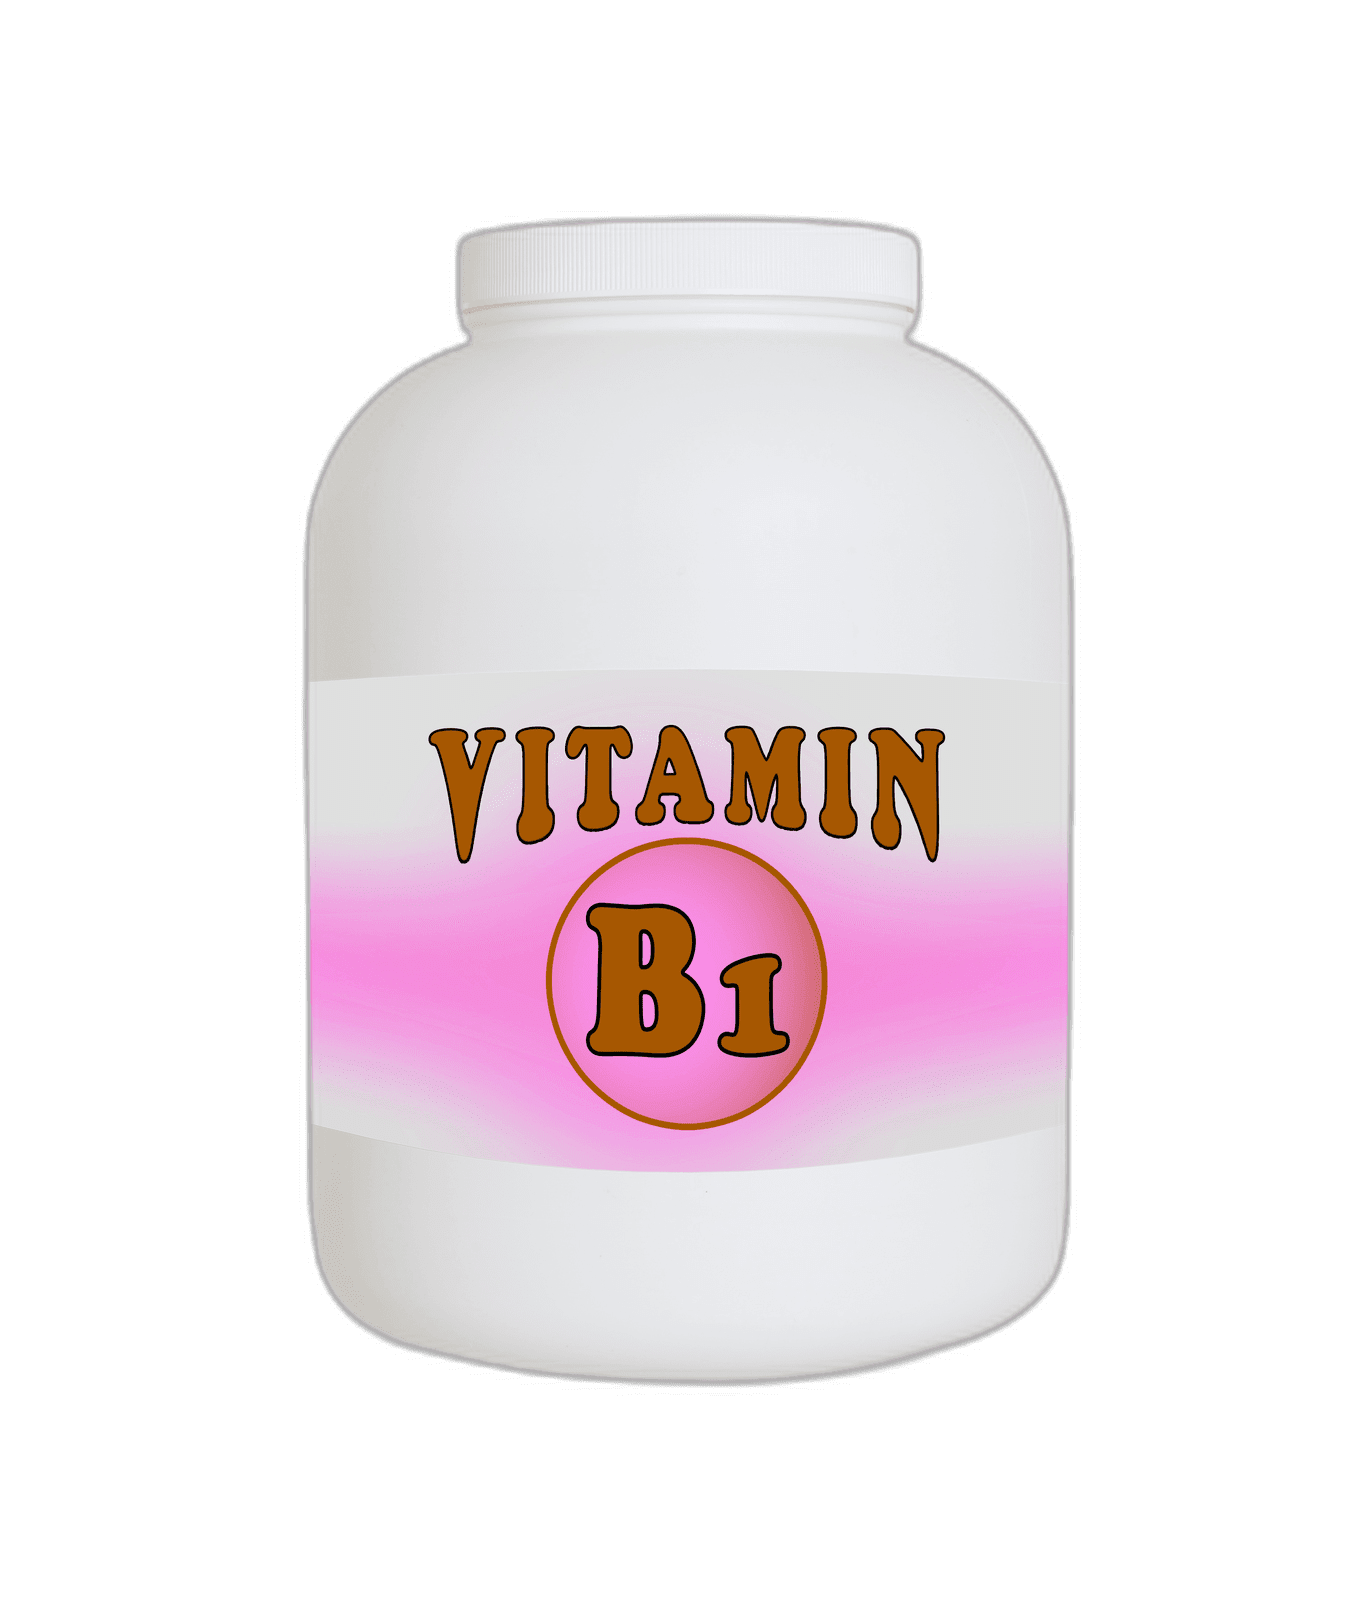 Vitamin B1 Test (Thiamine) - healthcare nt sickcare